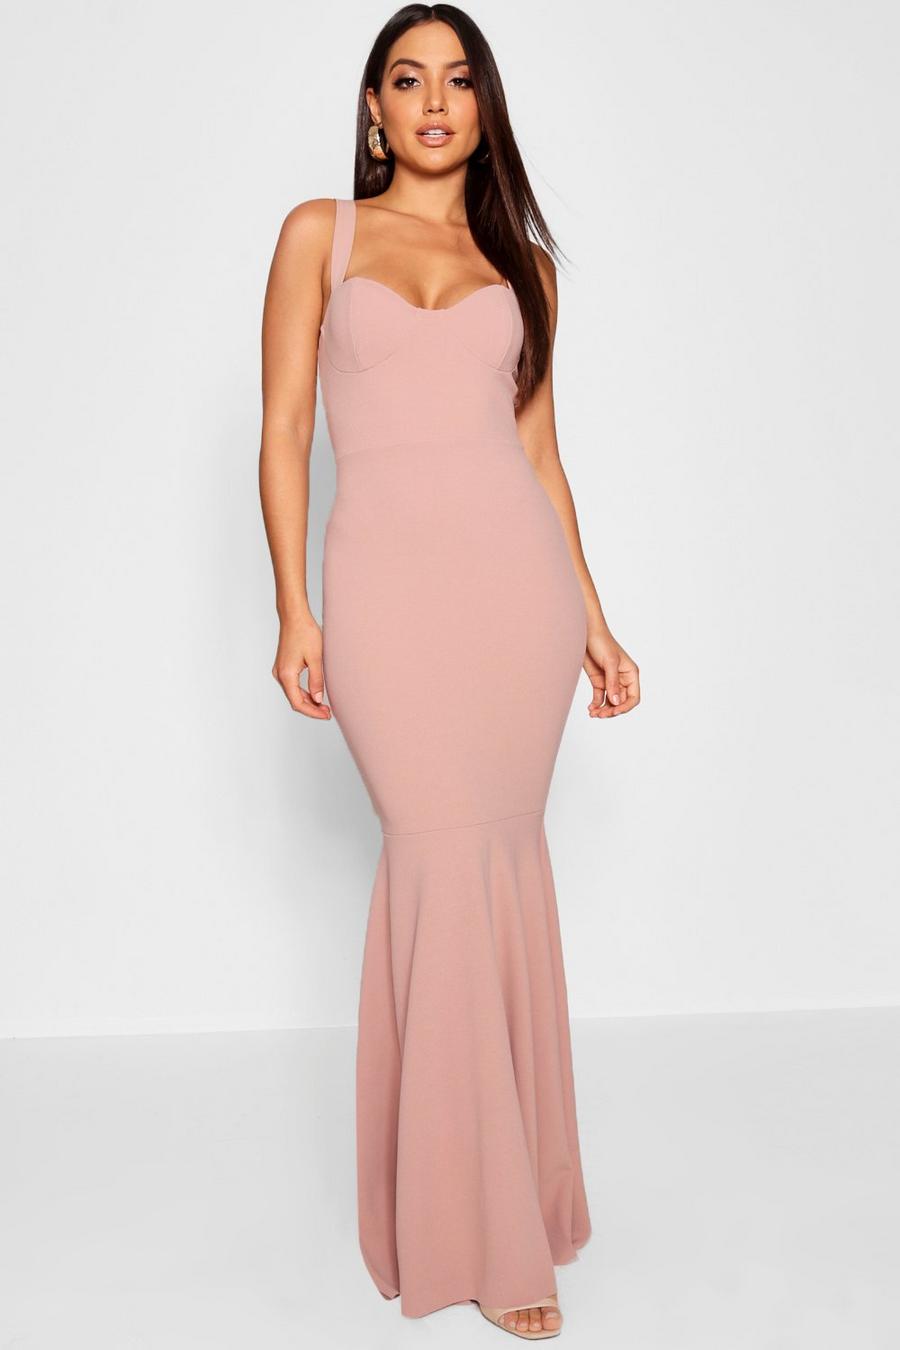 Blush pink Fitted Fishtail Maxi Bridesmaid Dress